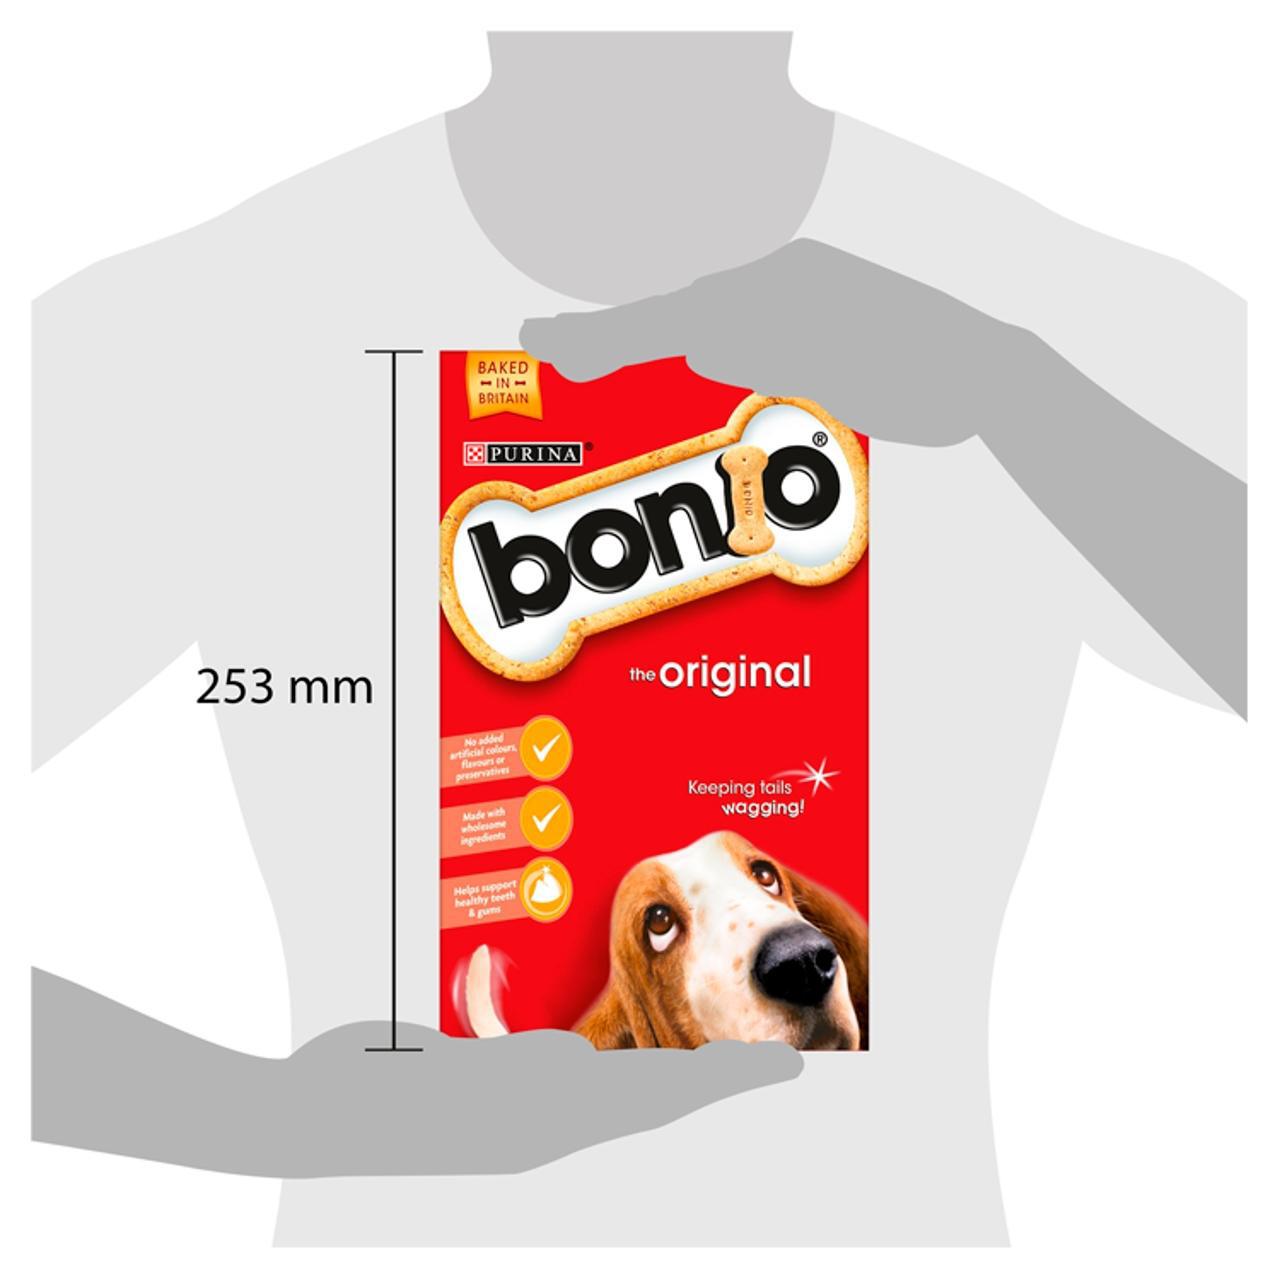 Bonio The Original Biscuits Dog Food 650g